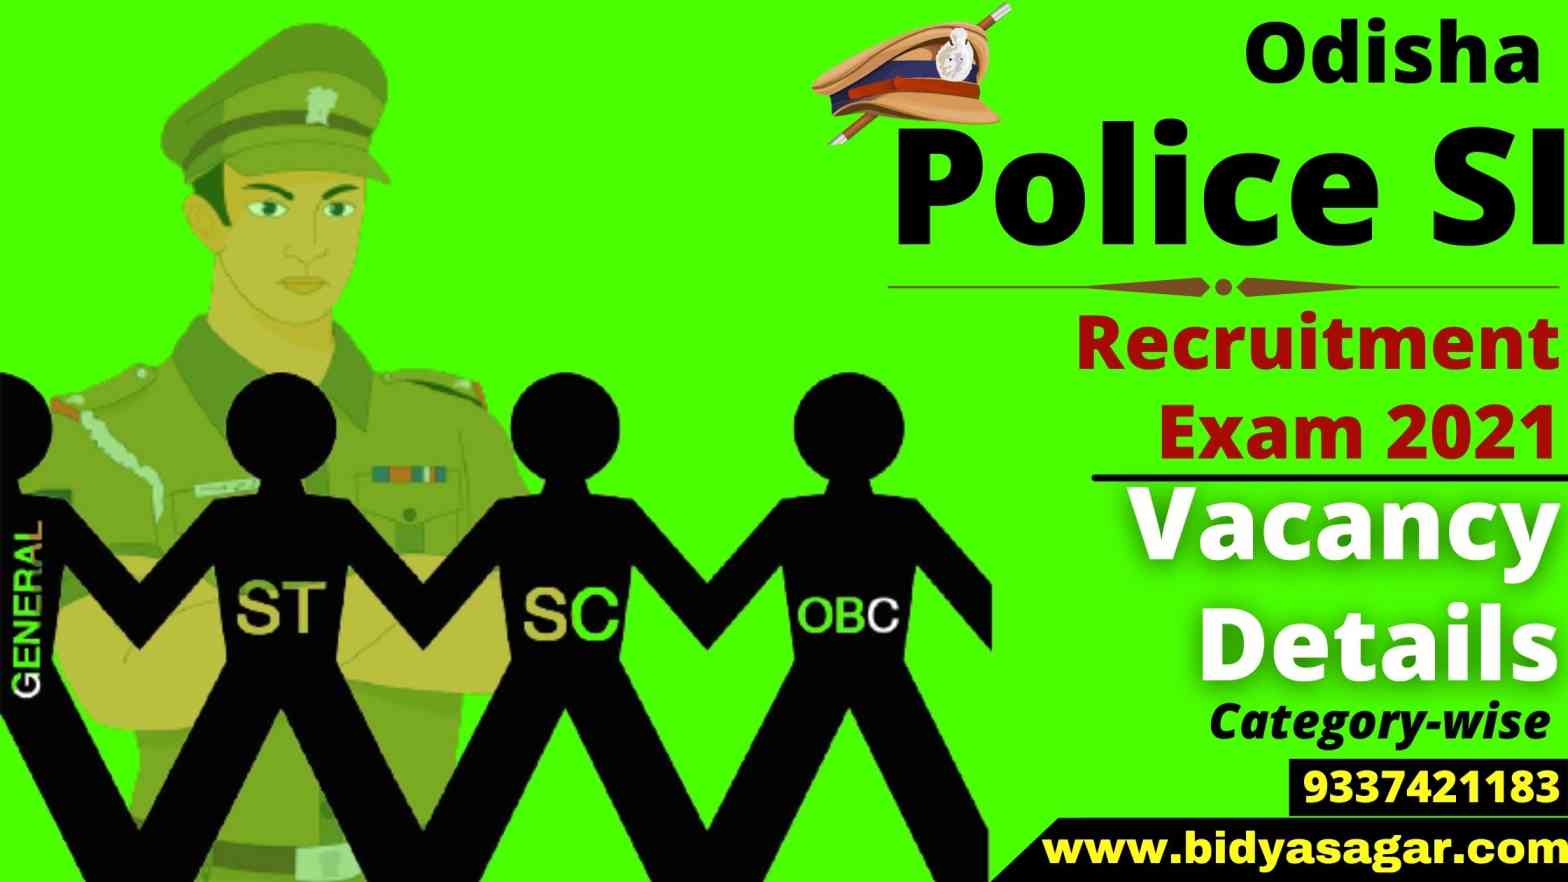 Odisha Police SI Vacancy Details